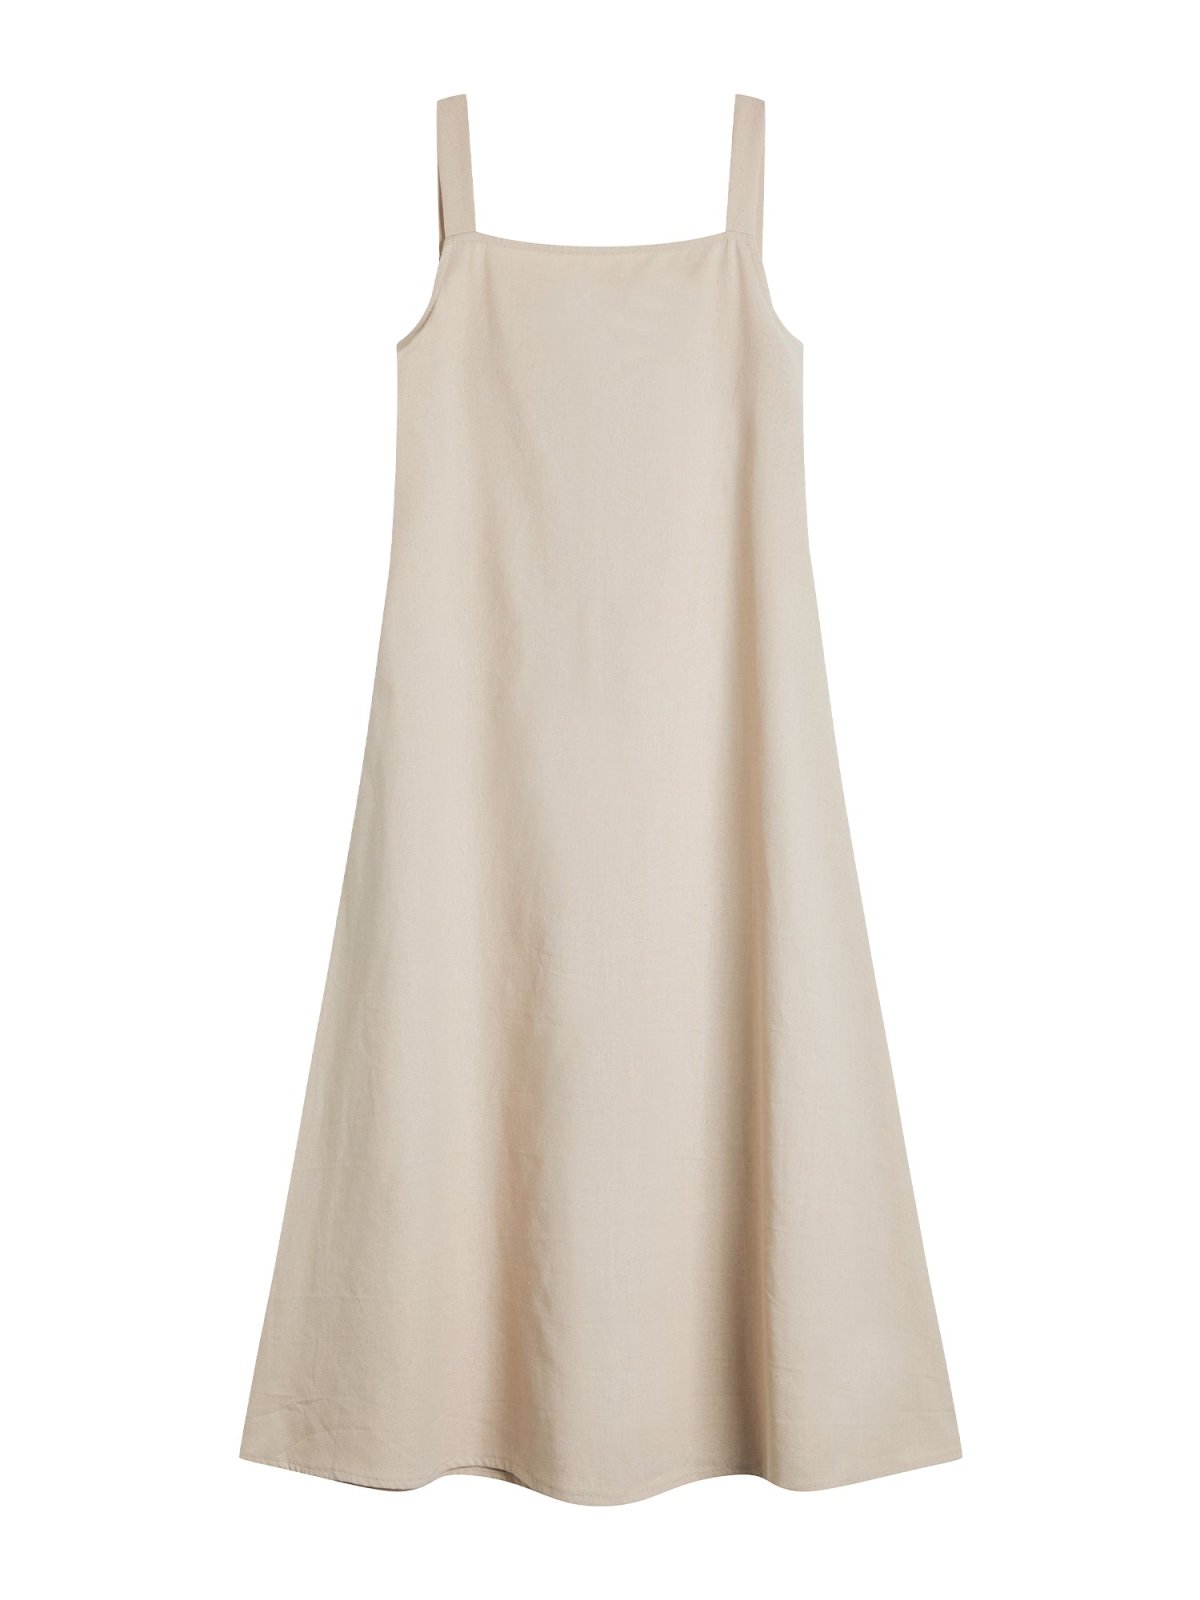 Nora Tie waist Midi Dress - DAG-DD9537-22AlmondF - Almond Cream - F - D'ZAGE Designs